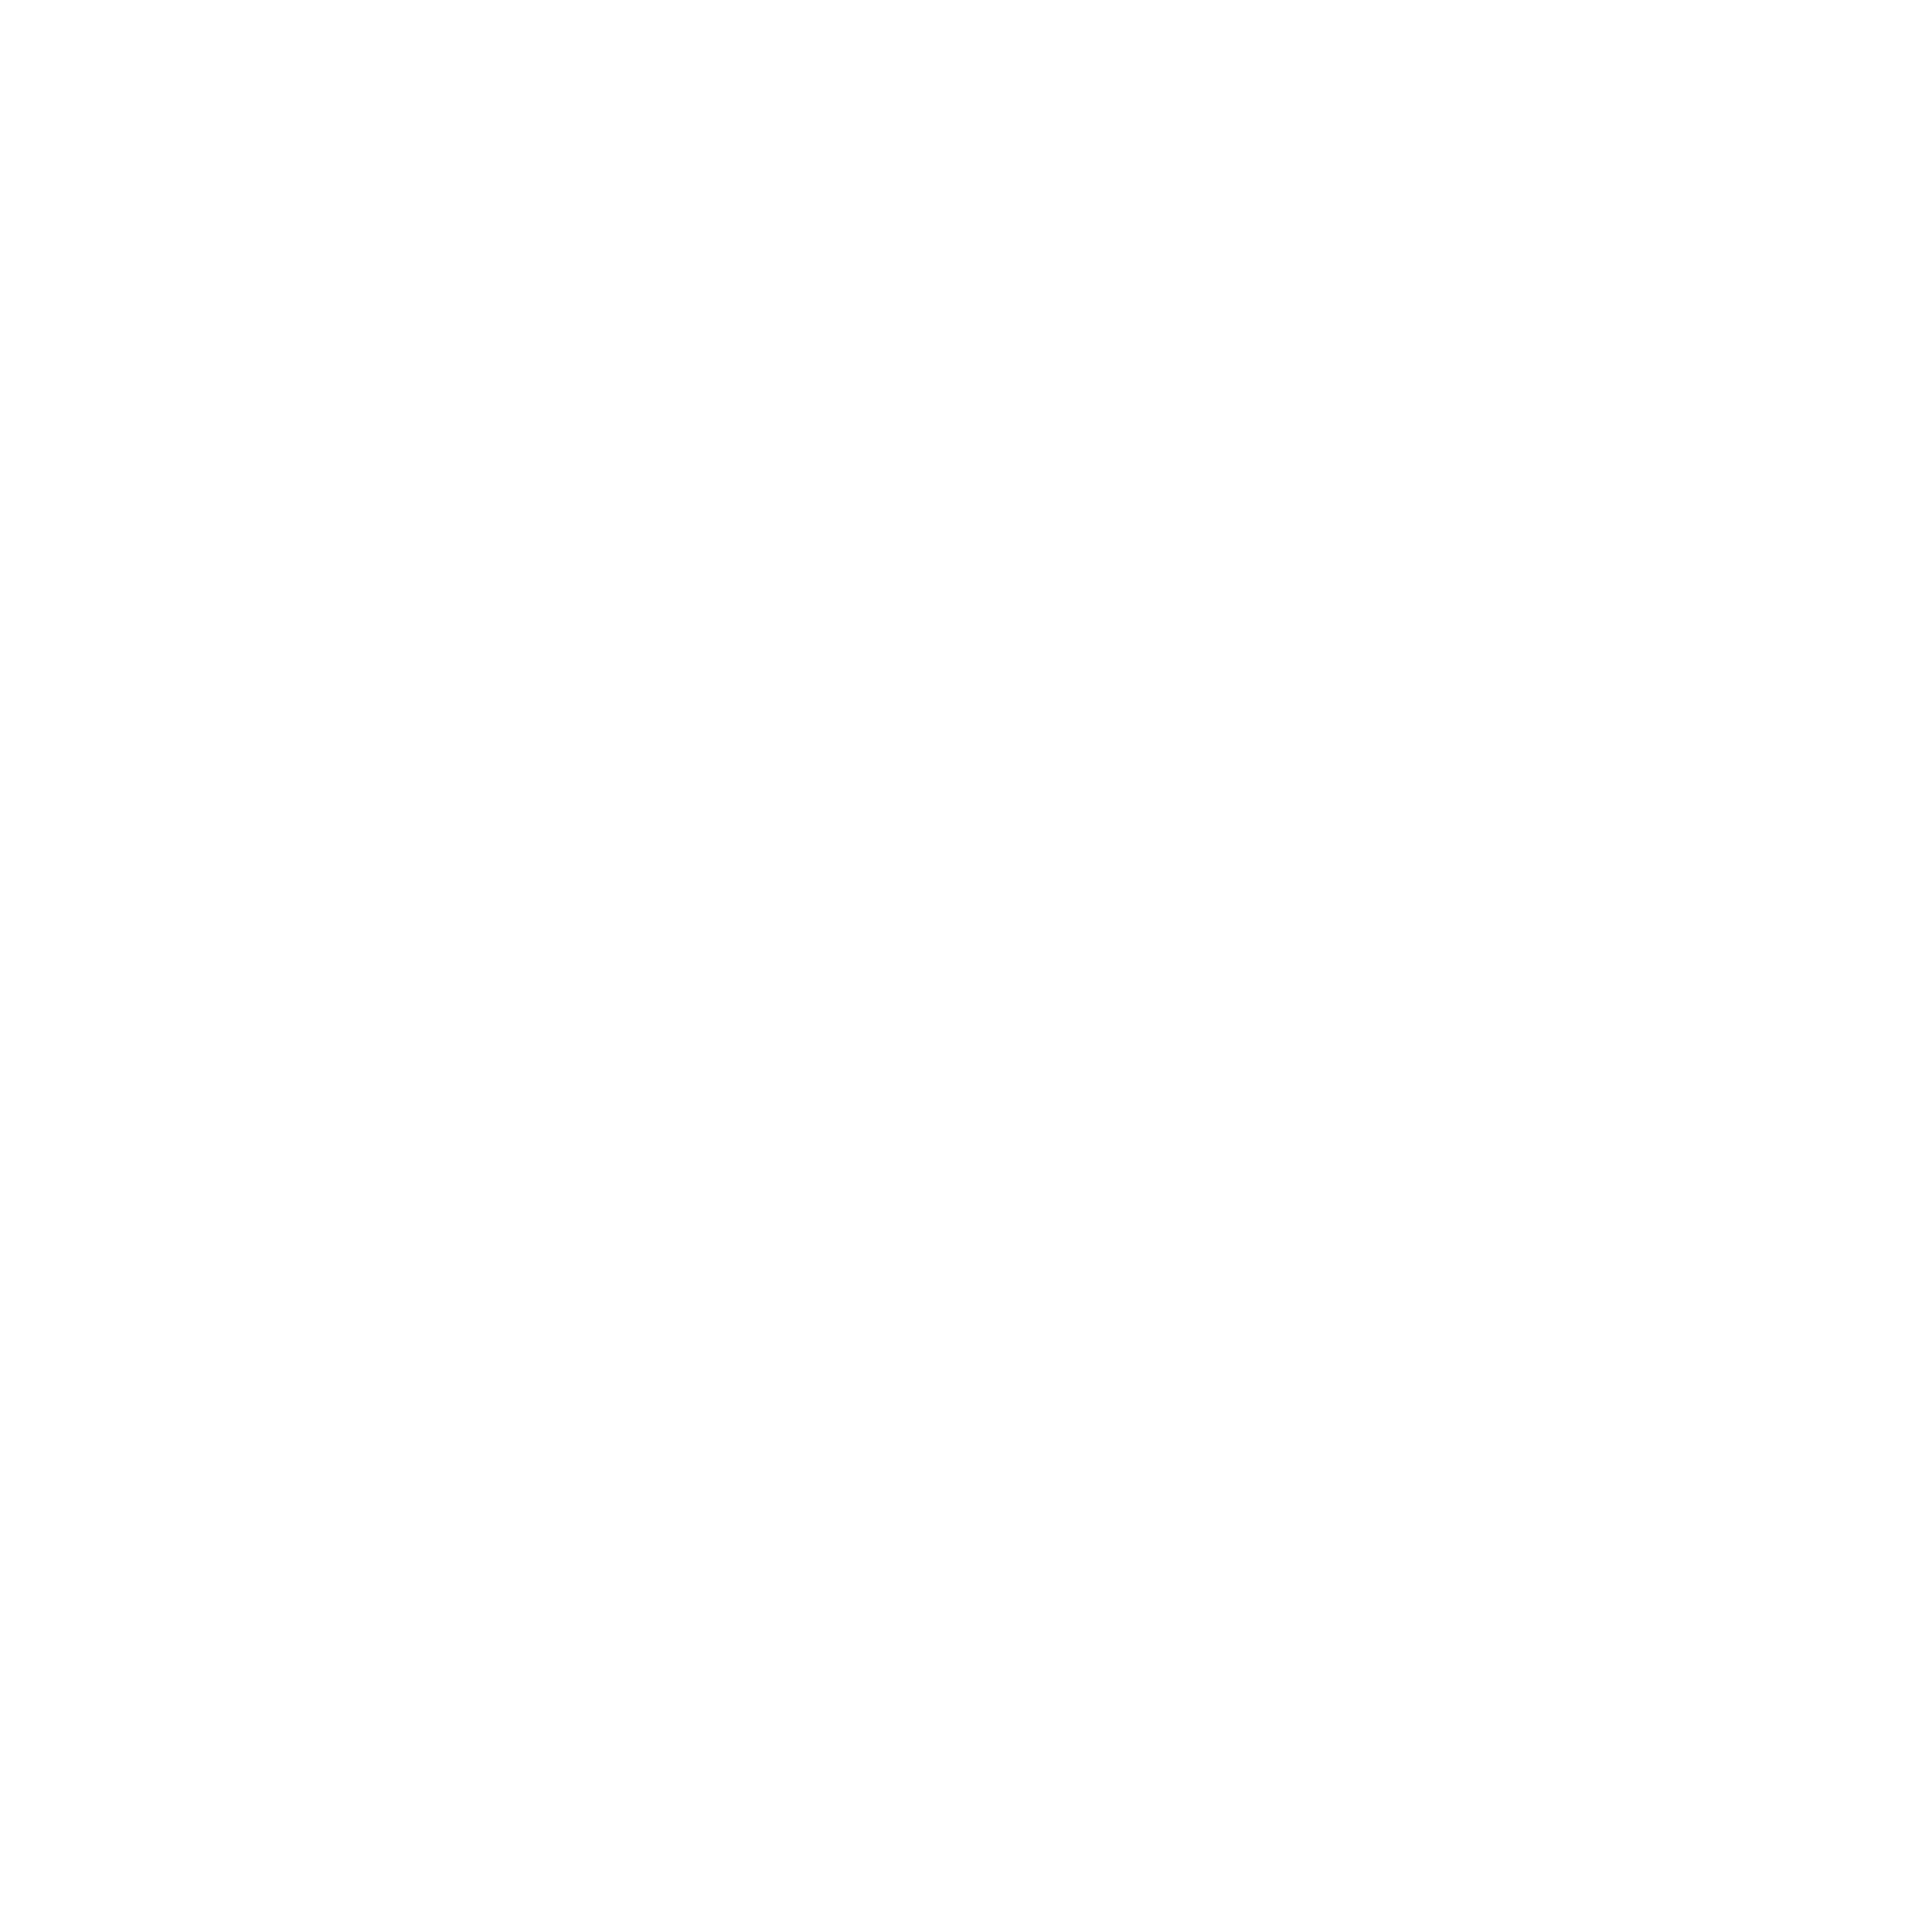 neutrolis.png